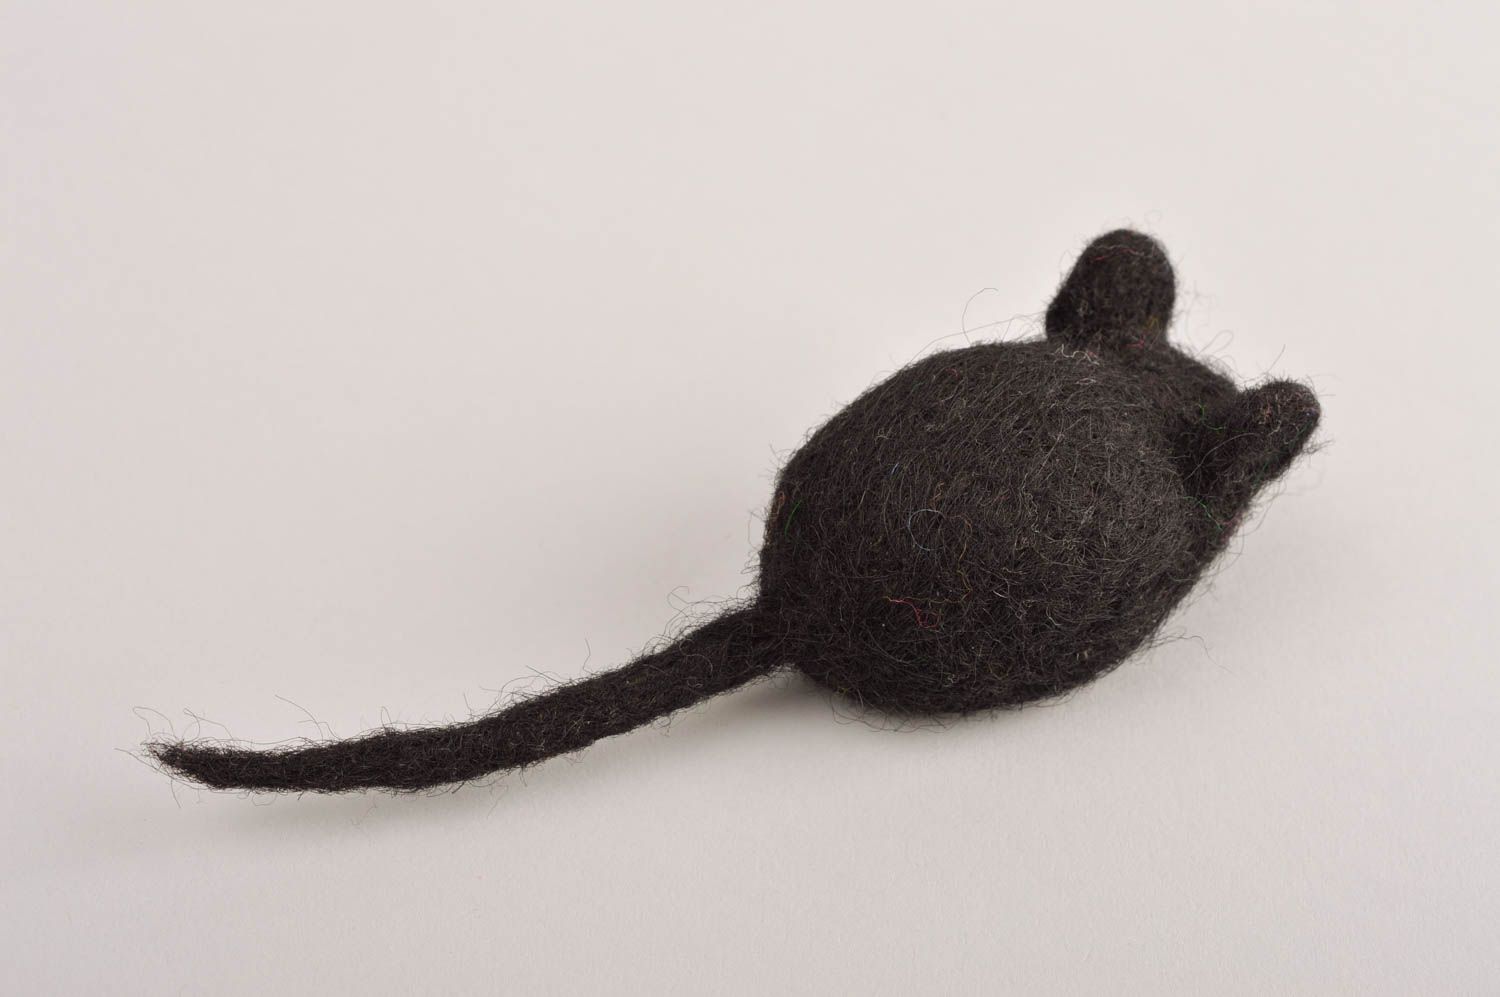 Handmade toy unusual toy for nursery decor ideas woolen toy for children photo 4